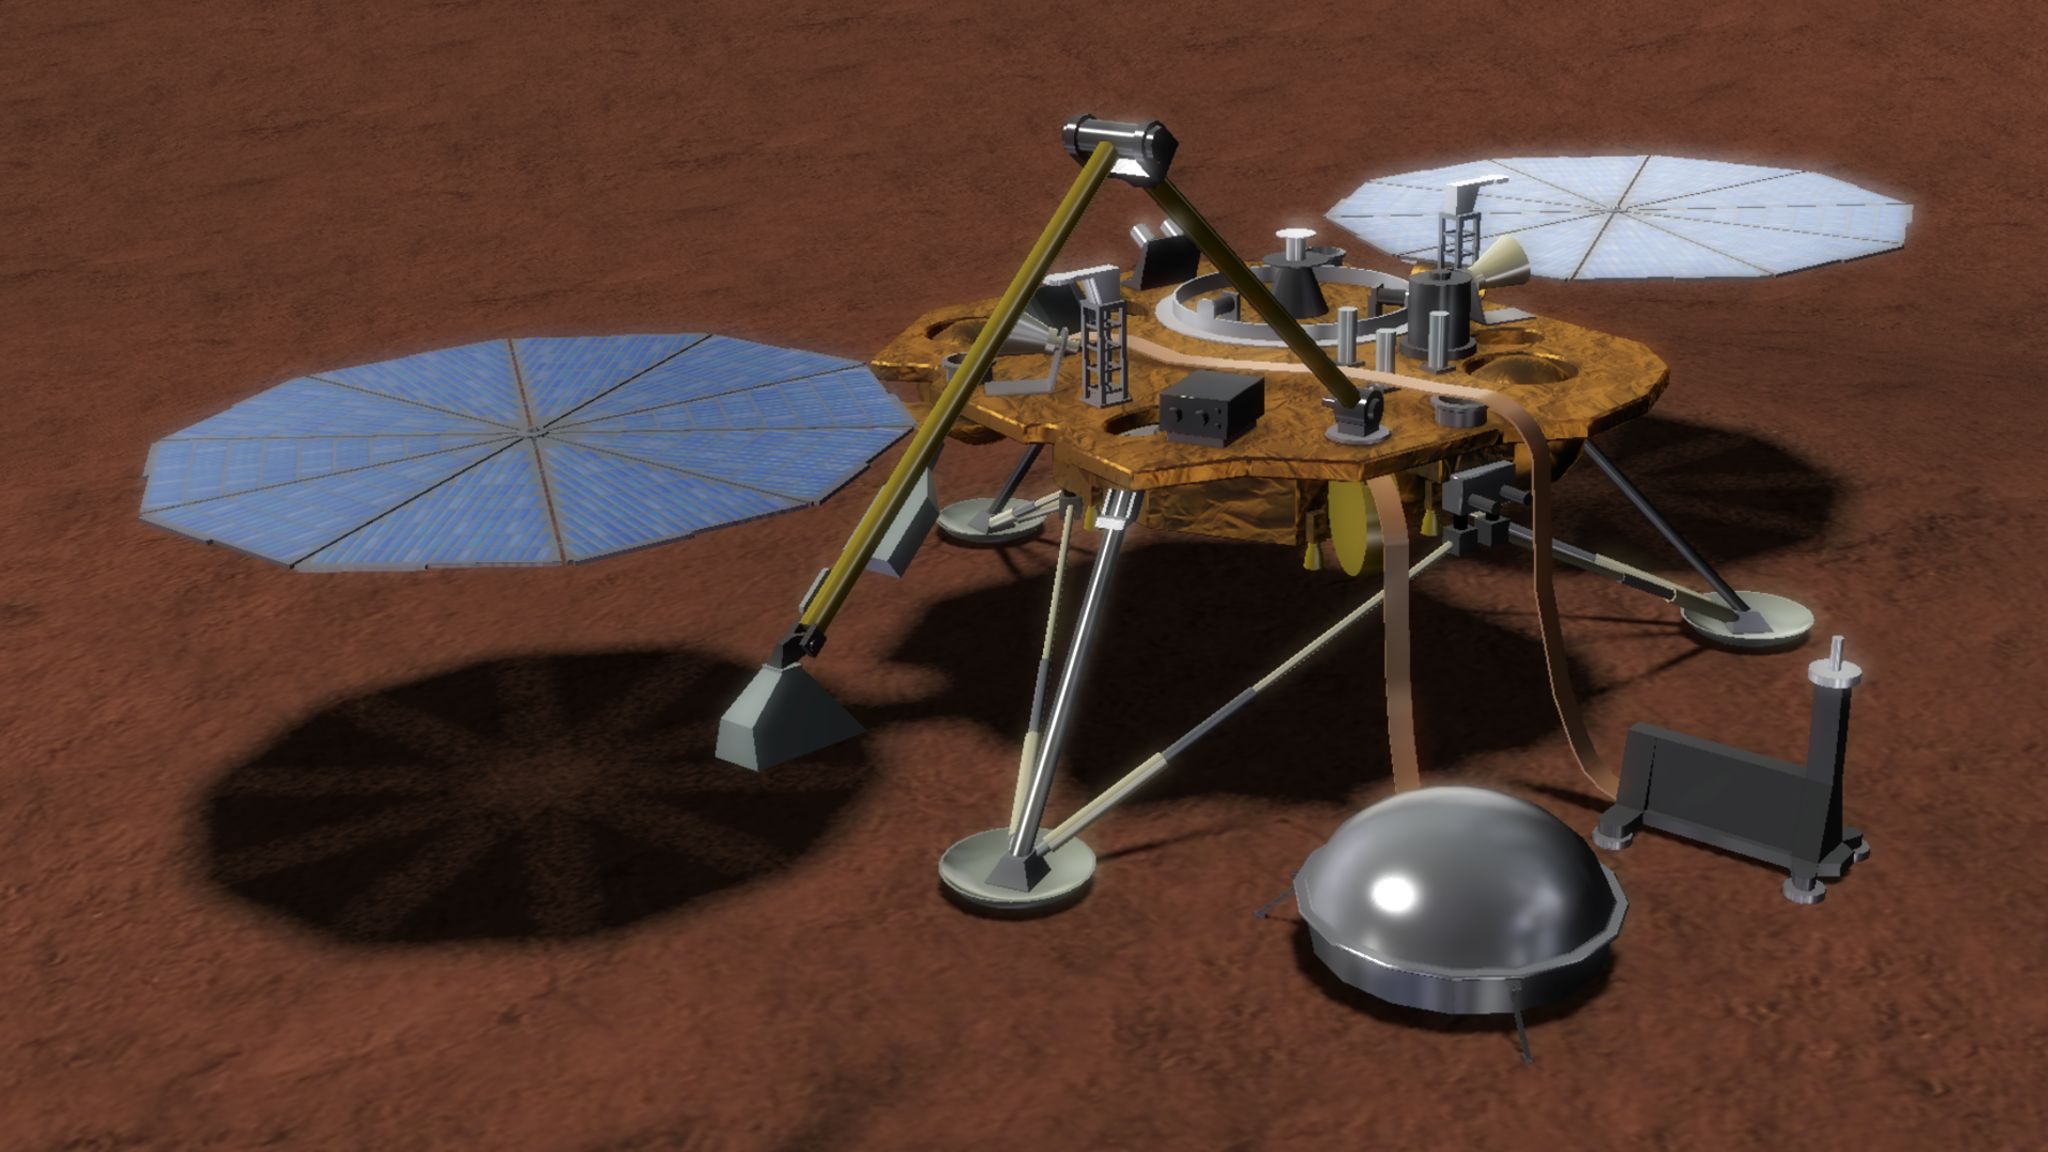 InSight de la NASA atterri sur Mars